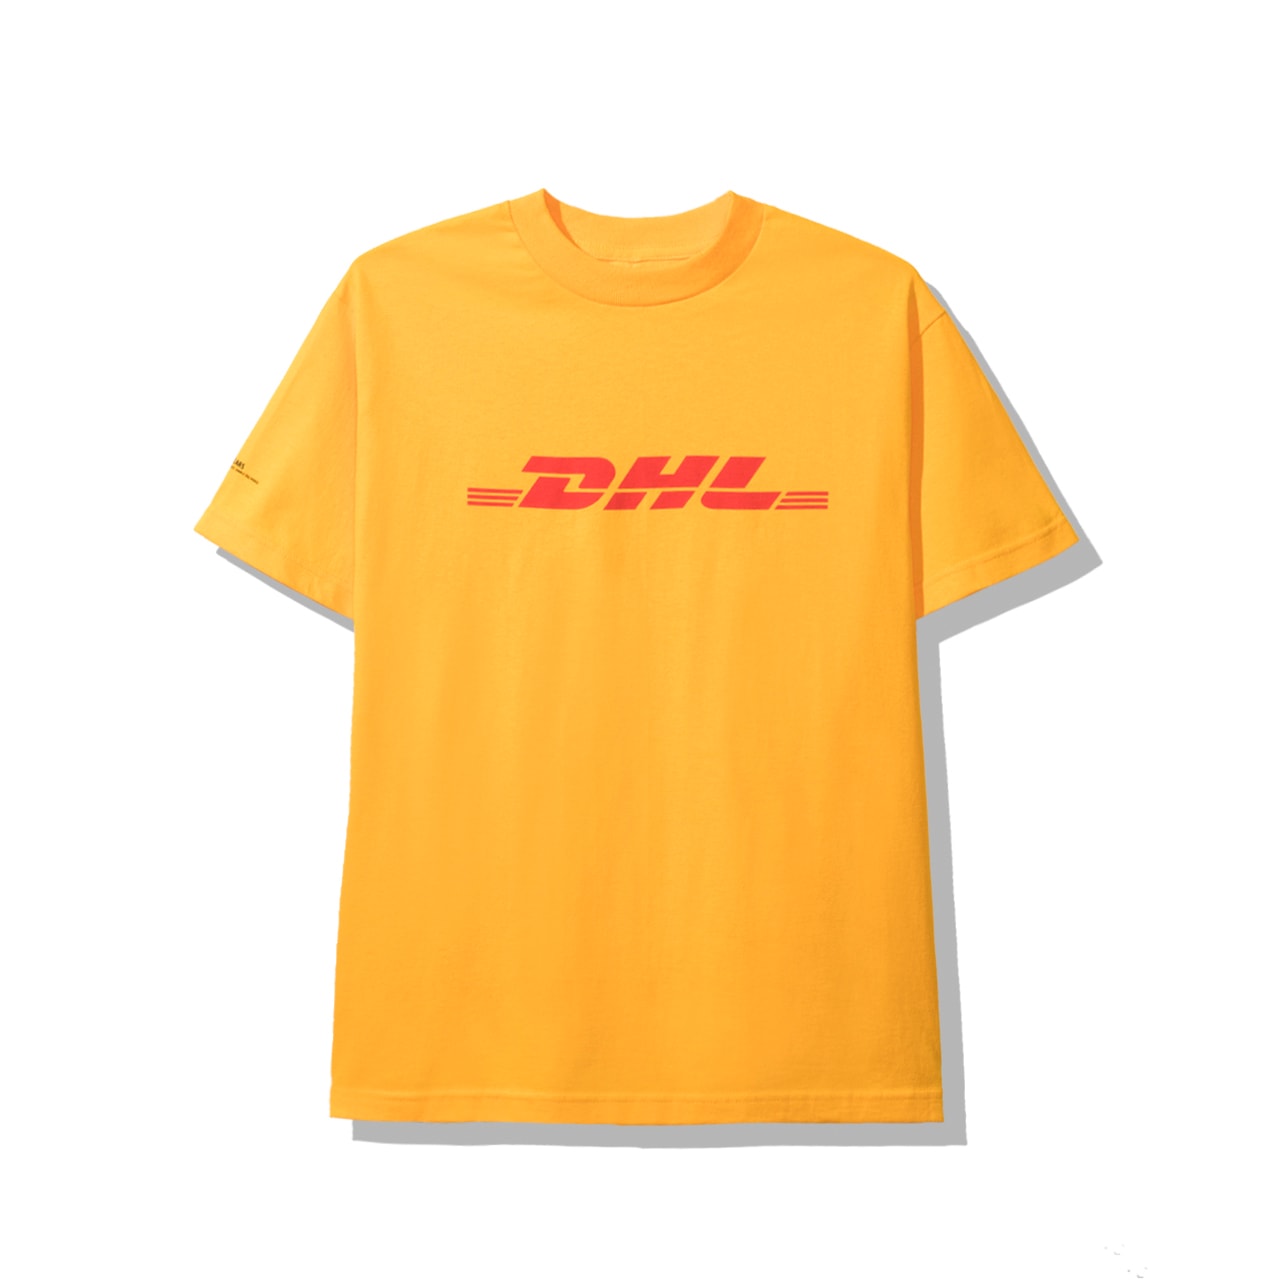 DHL x Anti Social Social Club Clothing Collab | Hypebeast